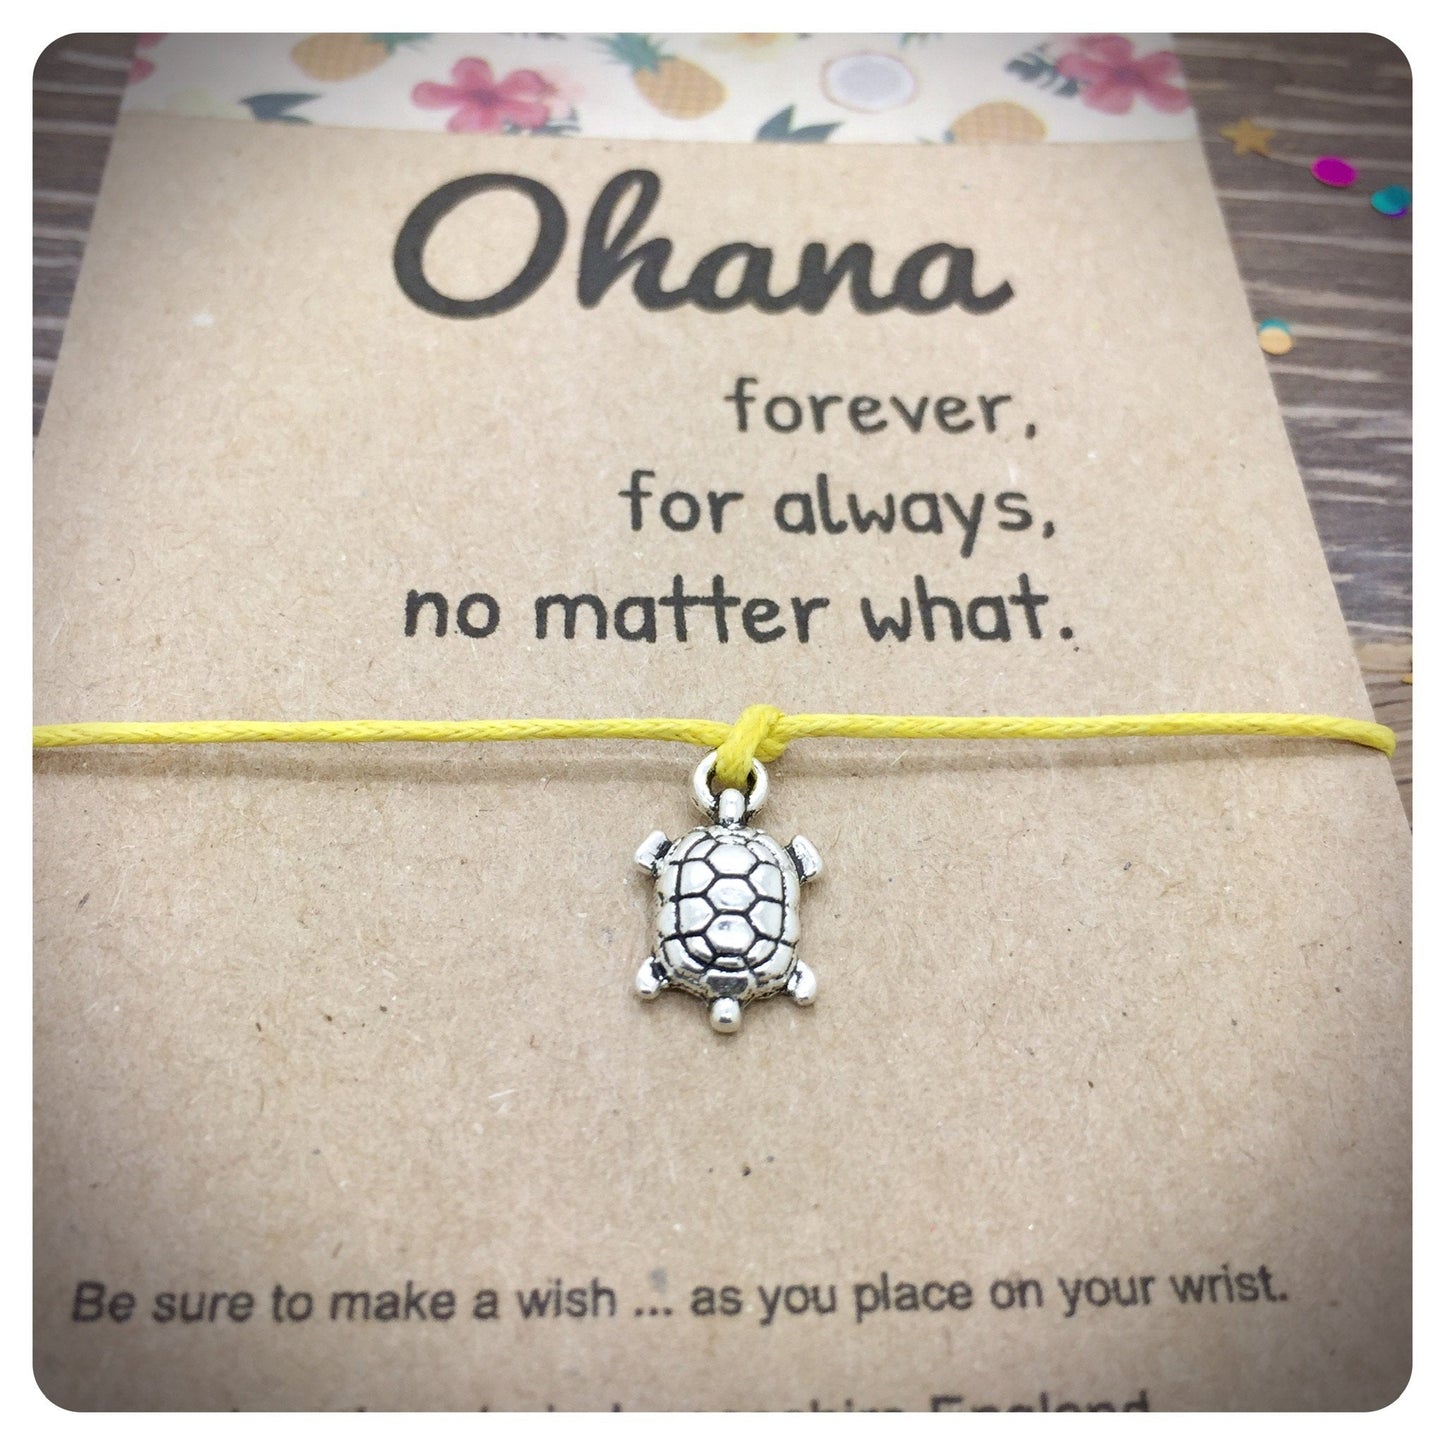 Ohana Wish Bracelet, Family Friendship Gift, Sea Turtle Wishlet, Tropical Card, Turtle Jewelry, Ohana Means Family, Cord String Bracelet